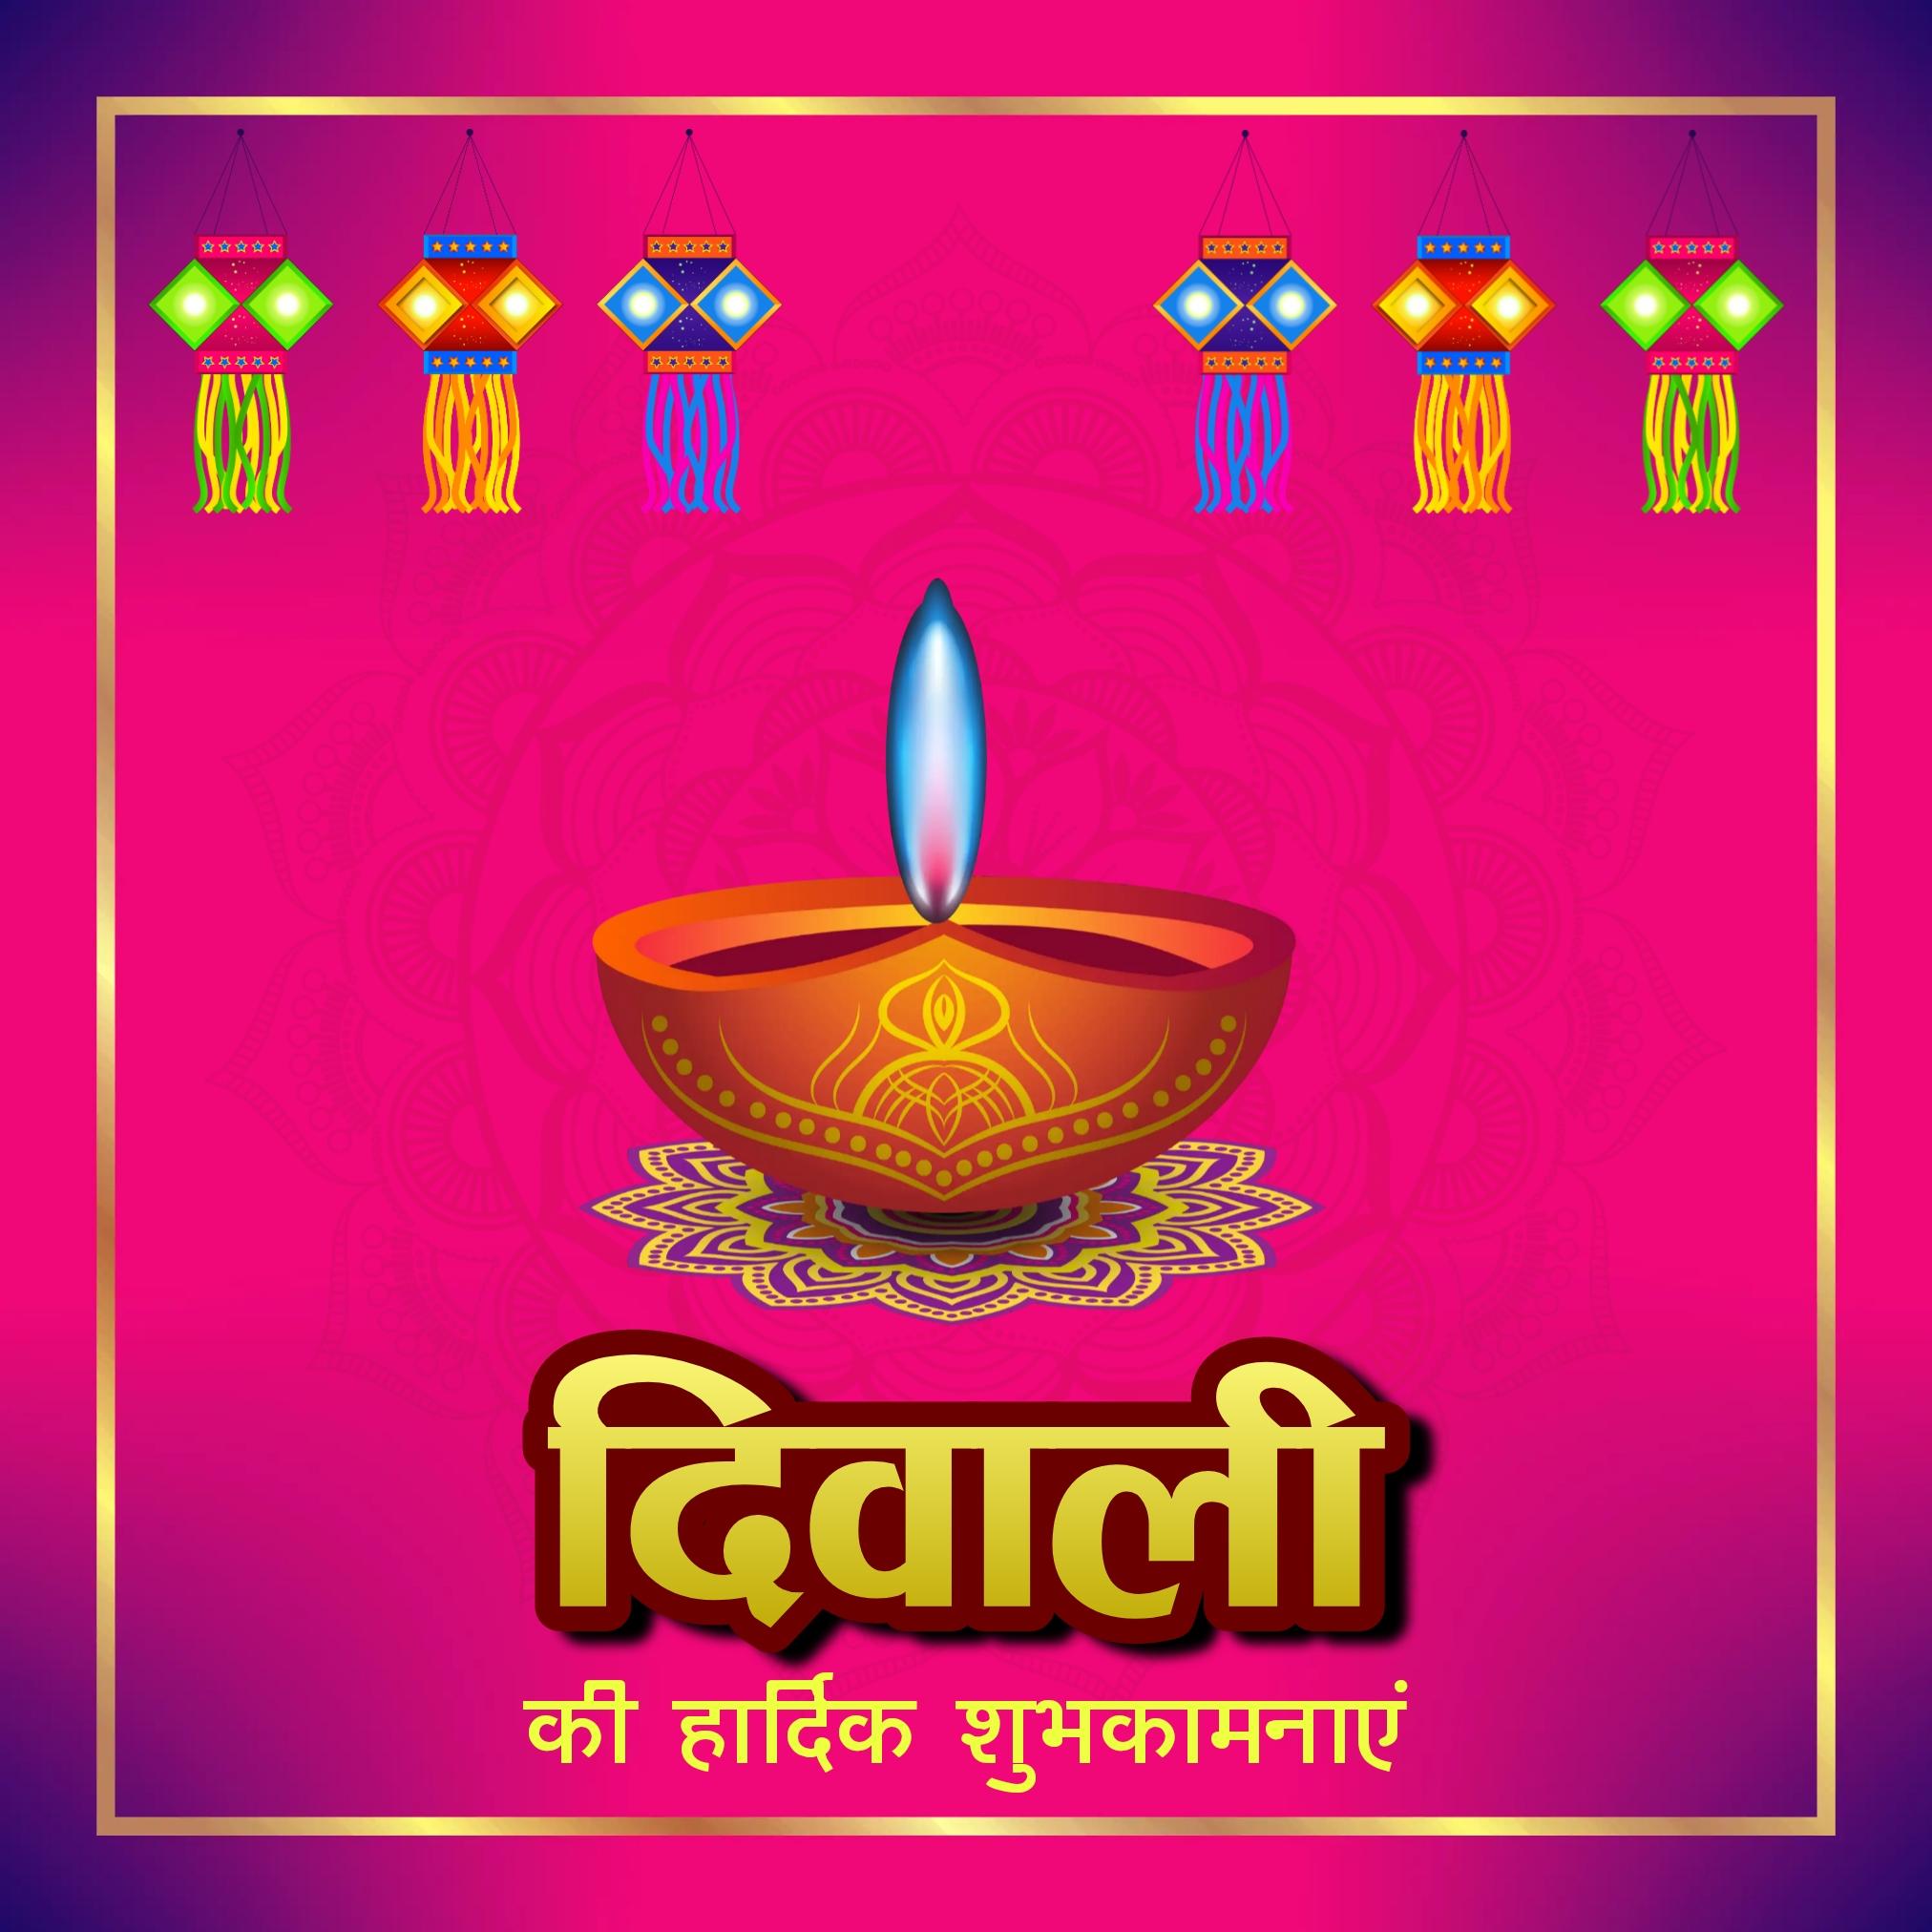 Happy Deepawali Images in Hindi